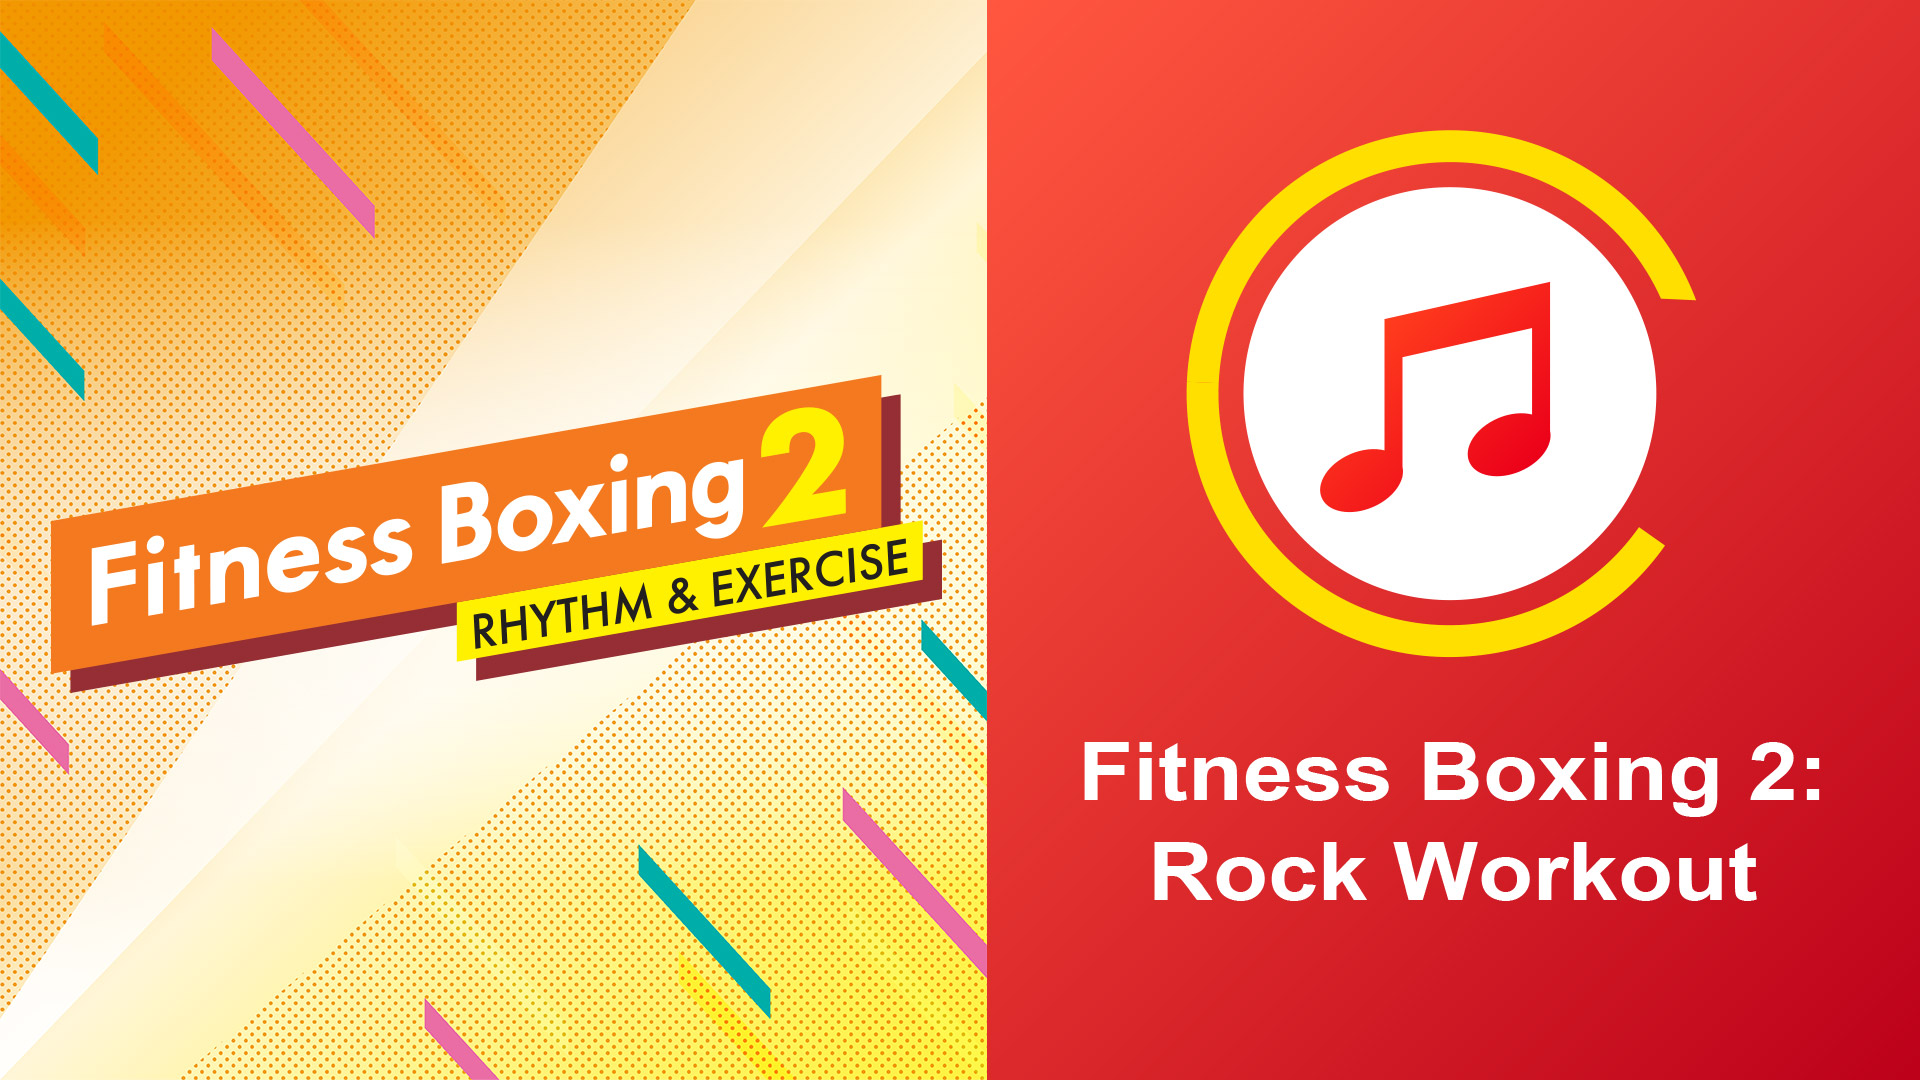 Fitness Boxing 2: Rock Workout/Fitness Boxing 2: Rhythm & Exercise/Nintendo  Switch/Nintendo